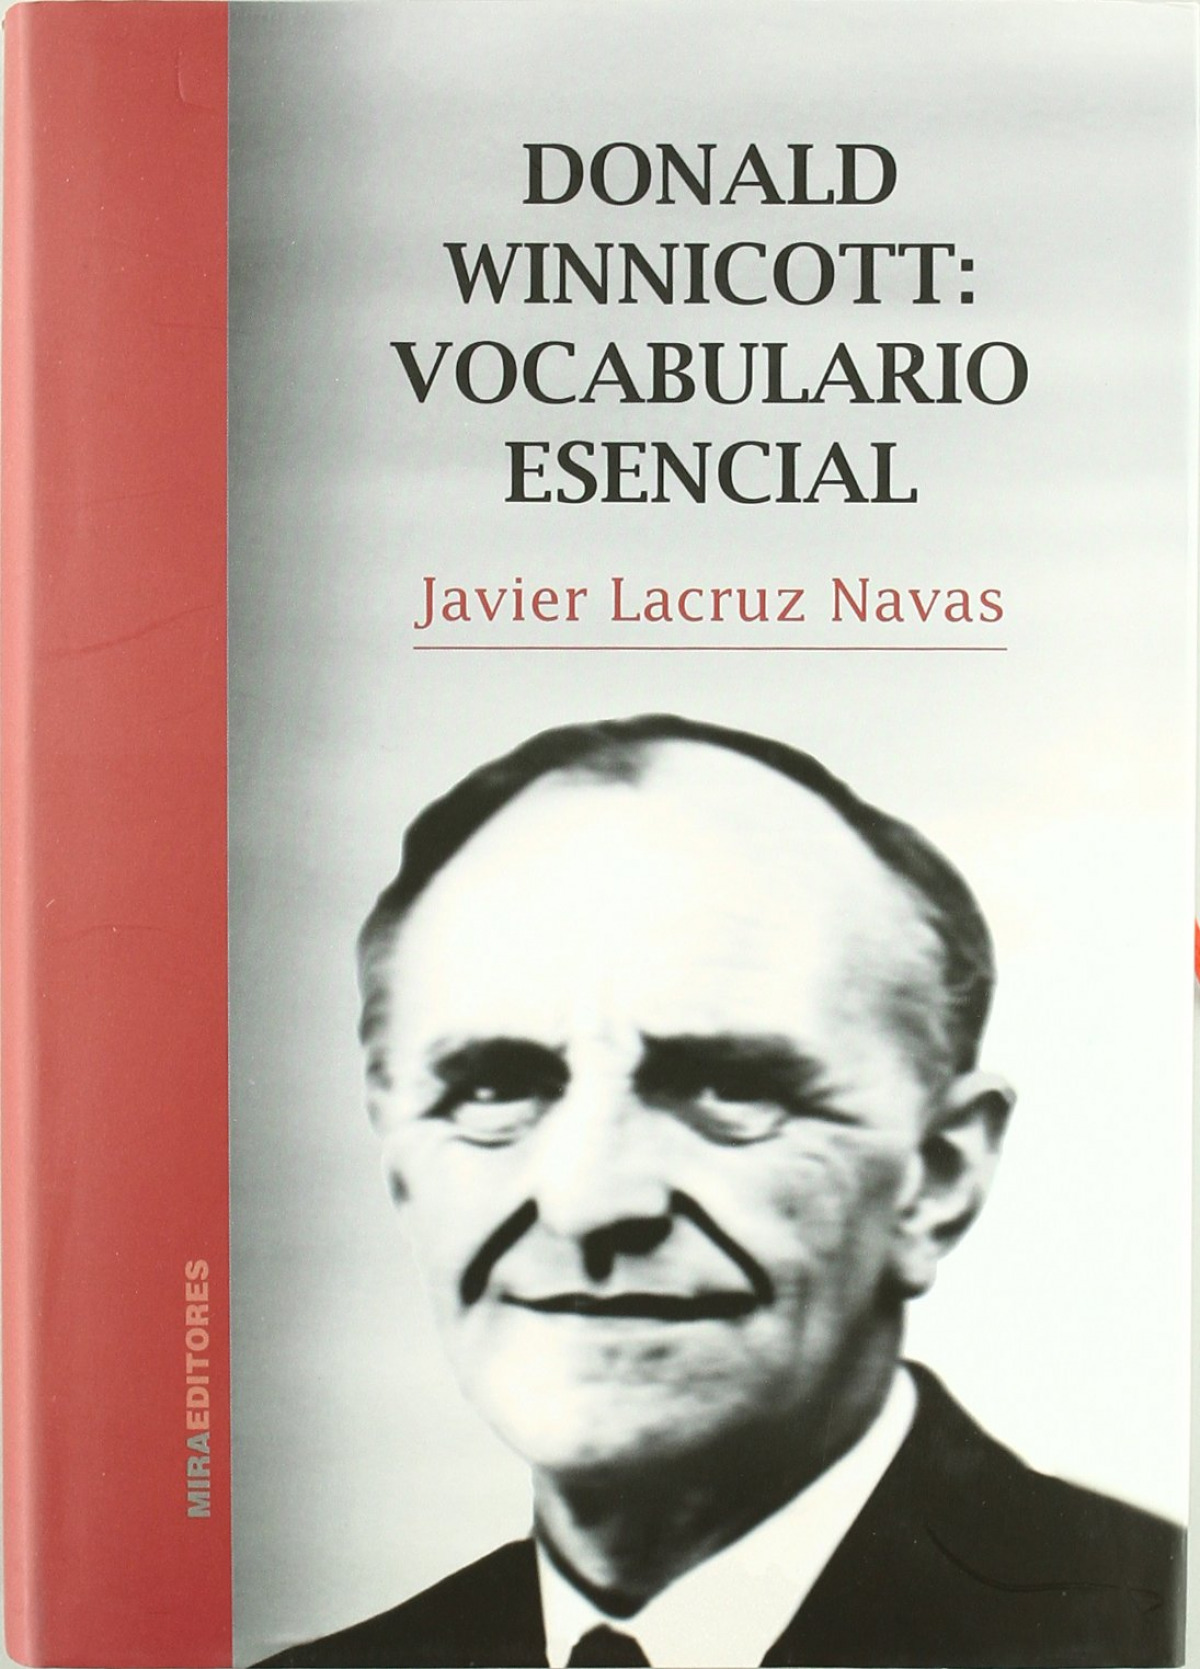 Donald winnicott:vocabulario esencial - Lacruz, Javier